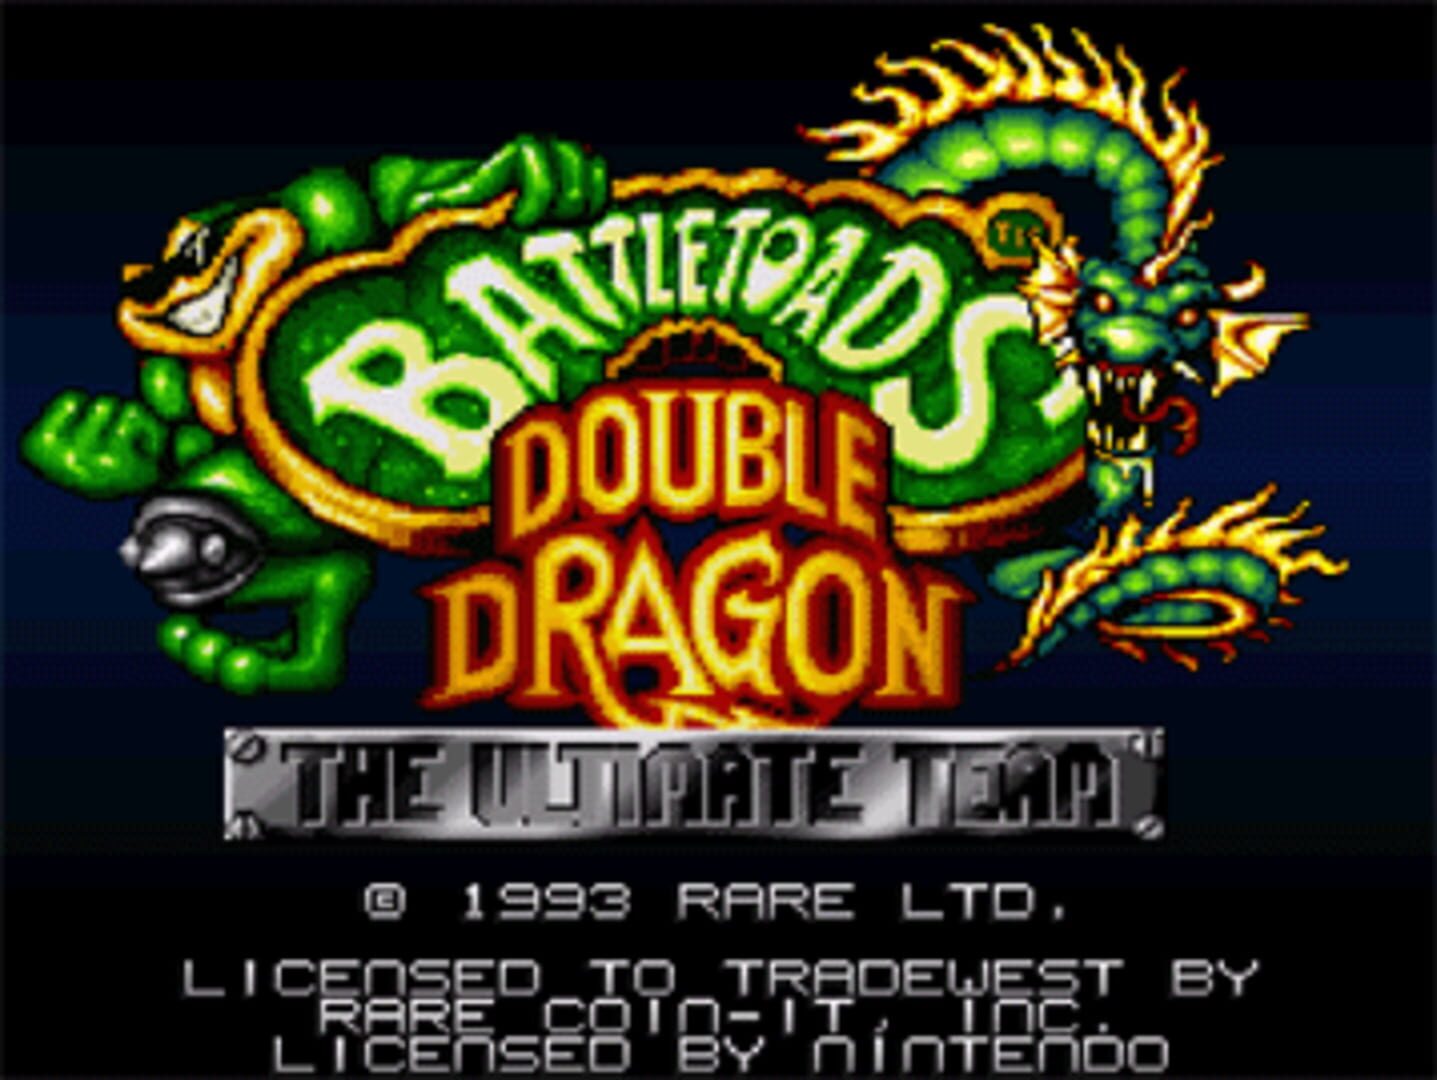 Battletoads snes. Игра Double Dragon. Battletoads Double Dragon the Ultimate Team Snes. Battletoads & Double Dragon - the Ultimate Team. Battletoads and Double Dragon (1993 год, rare).